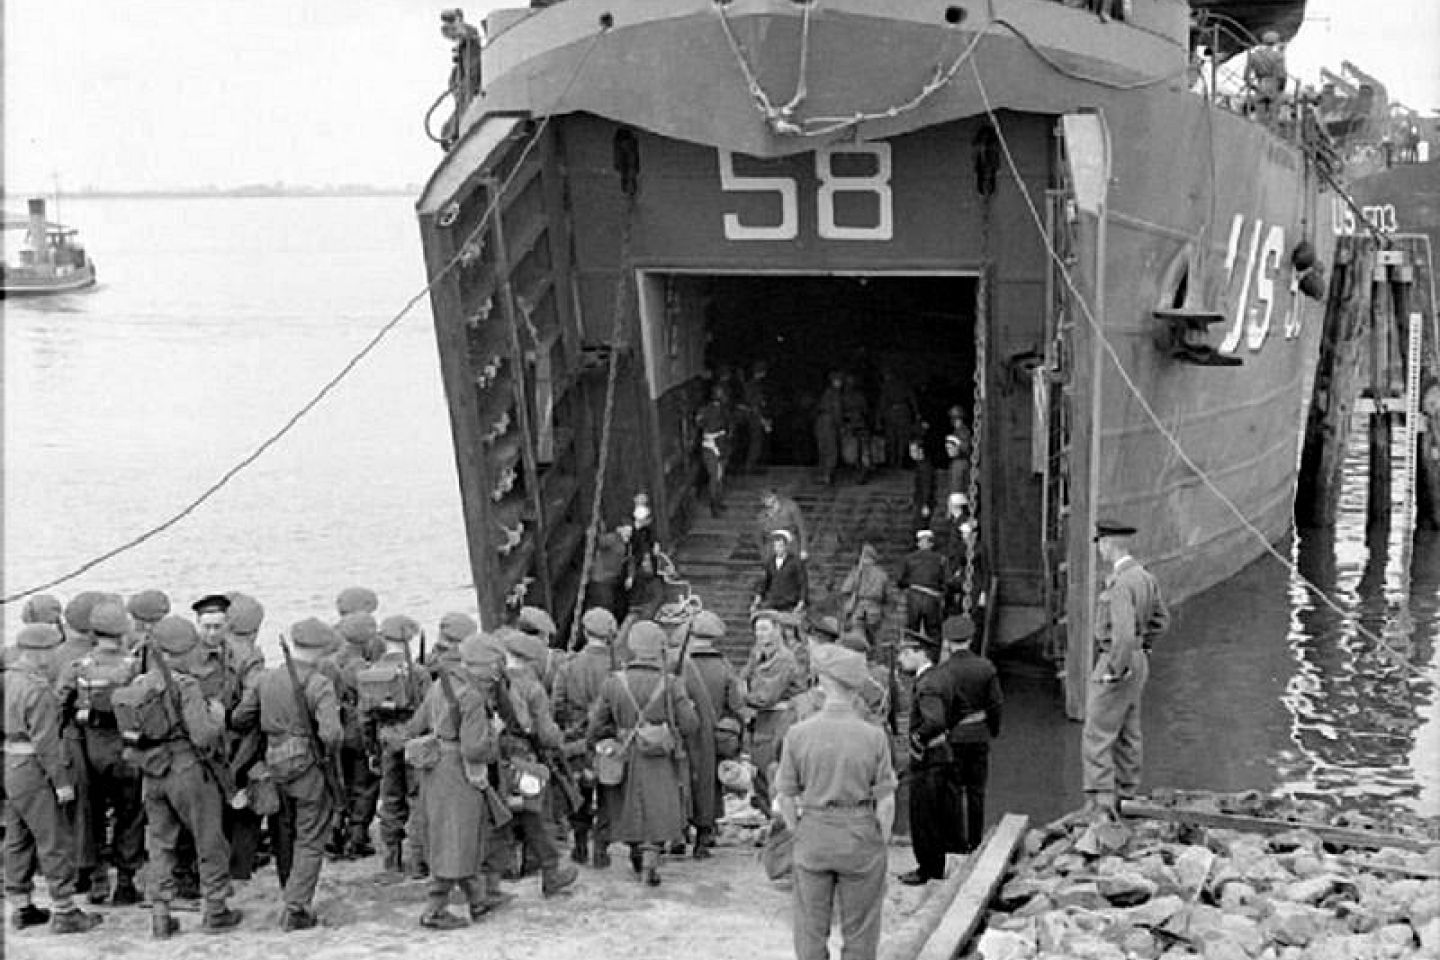 British troops boarding USS LST-58.